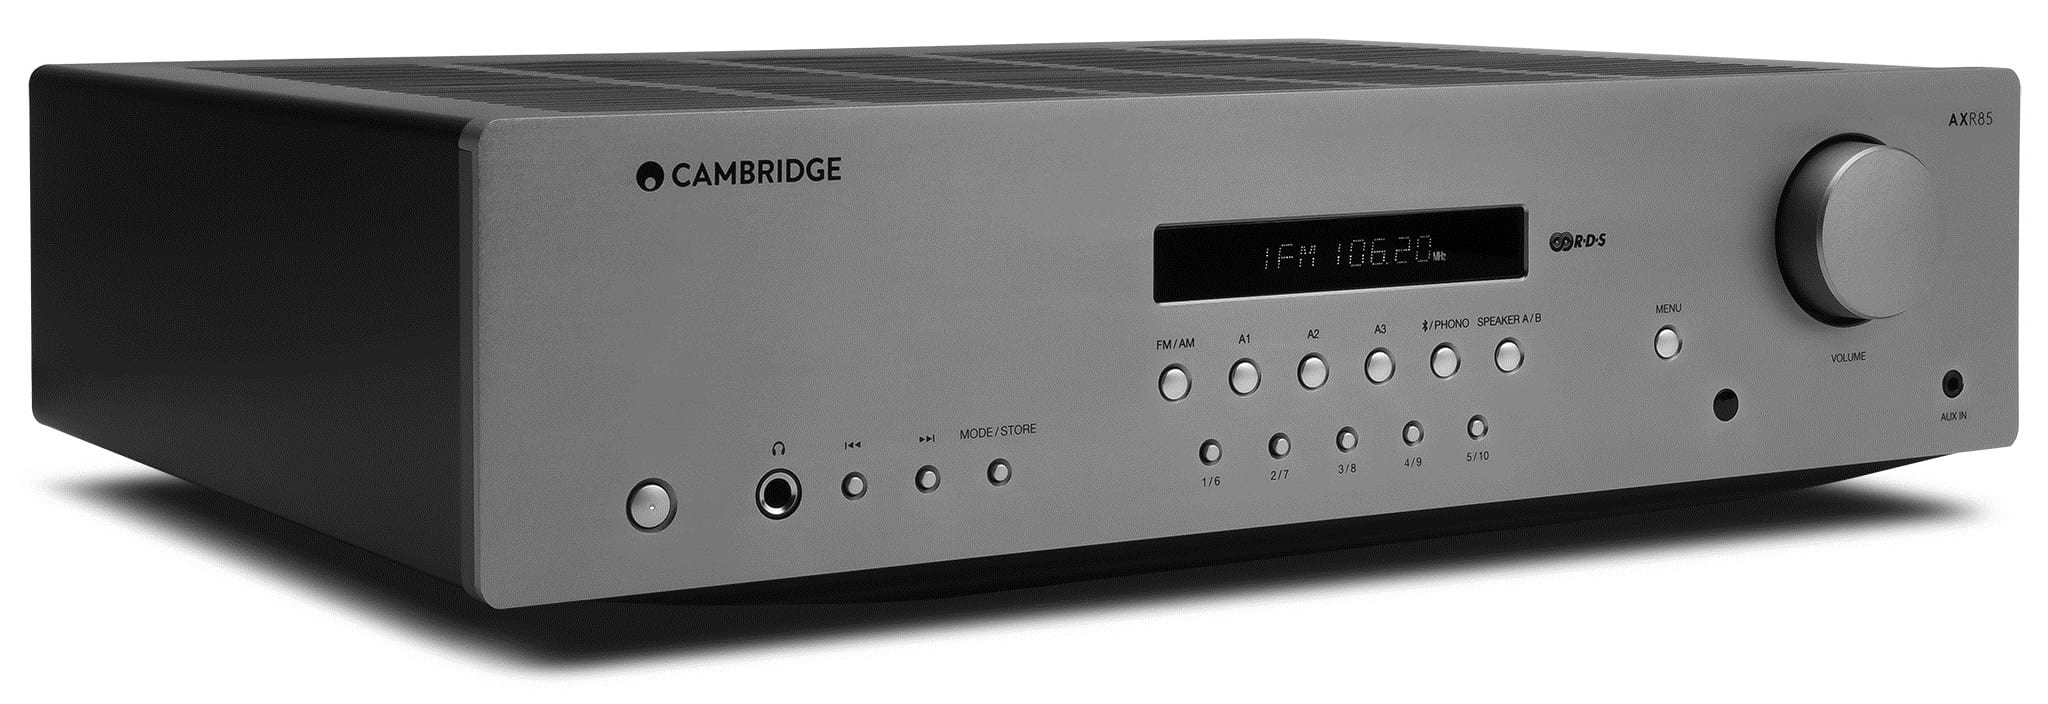 Cambridge Audio AXR85 grijs - Stereo receiver